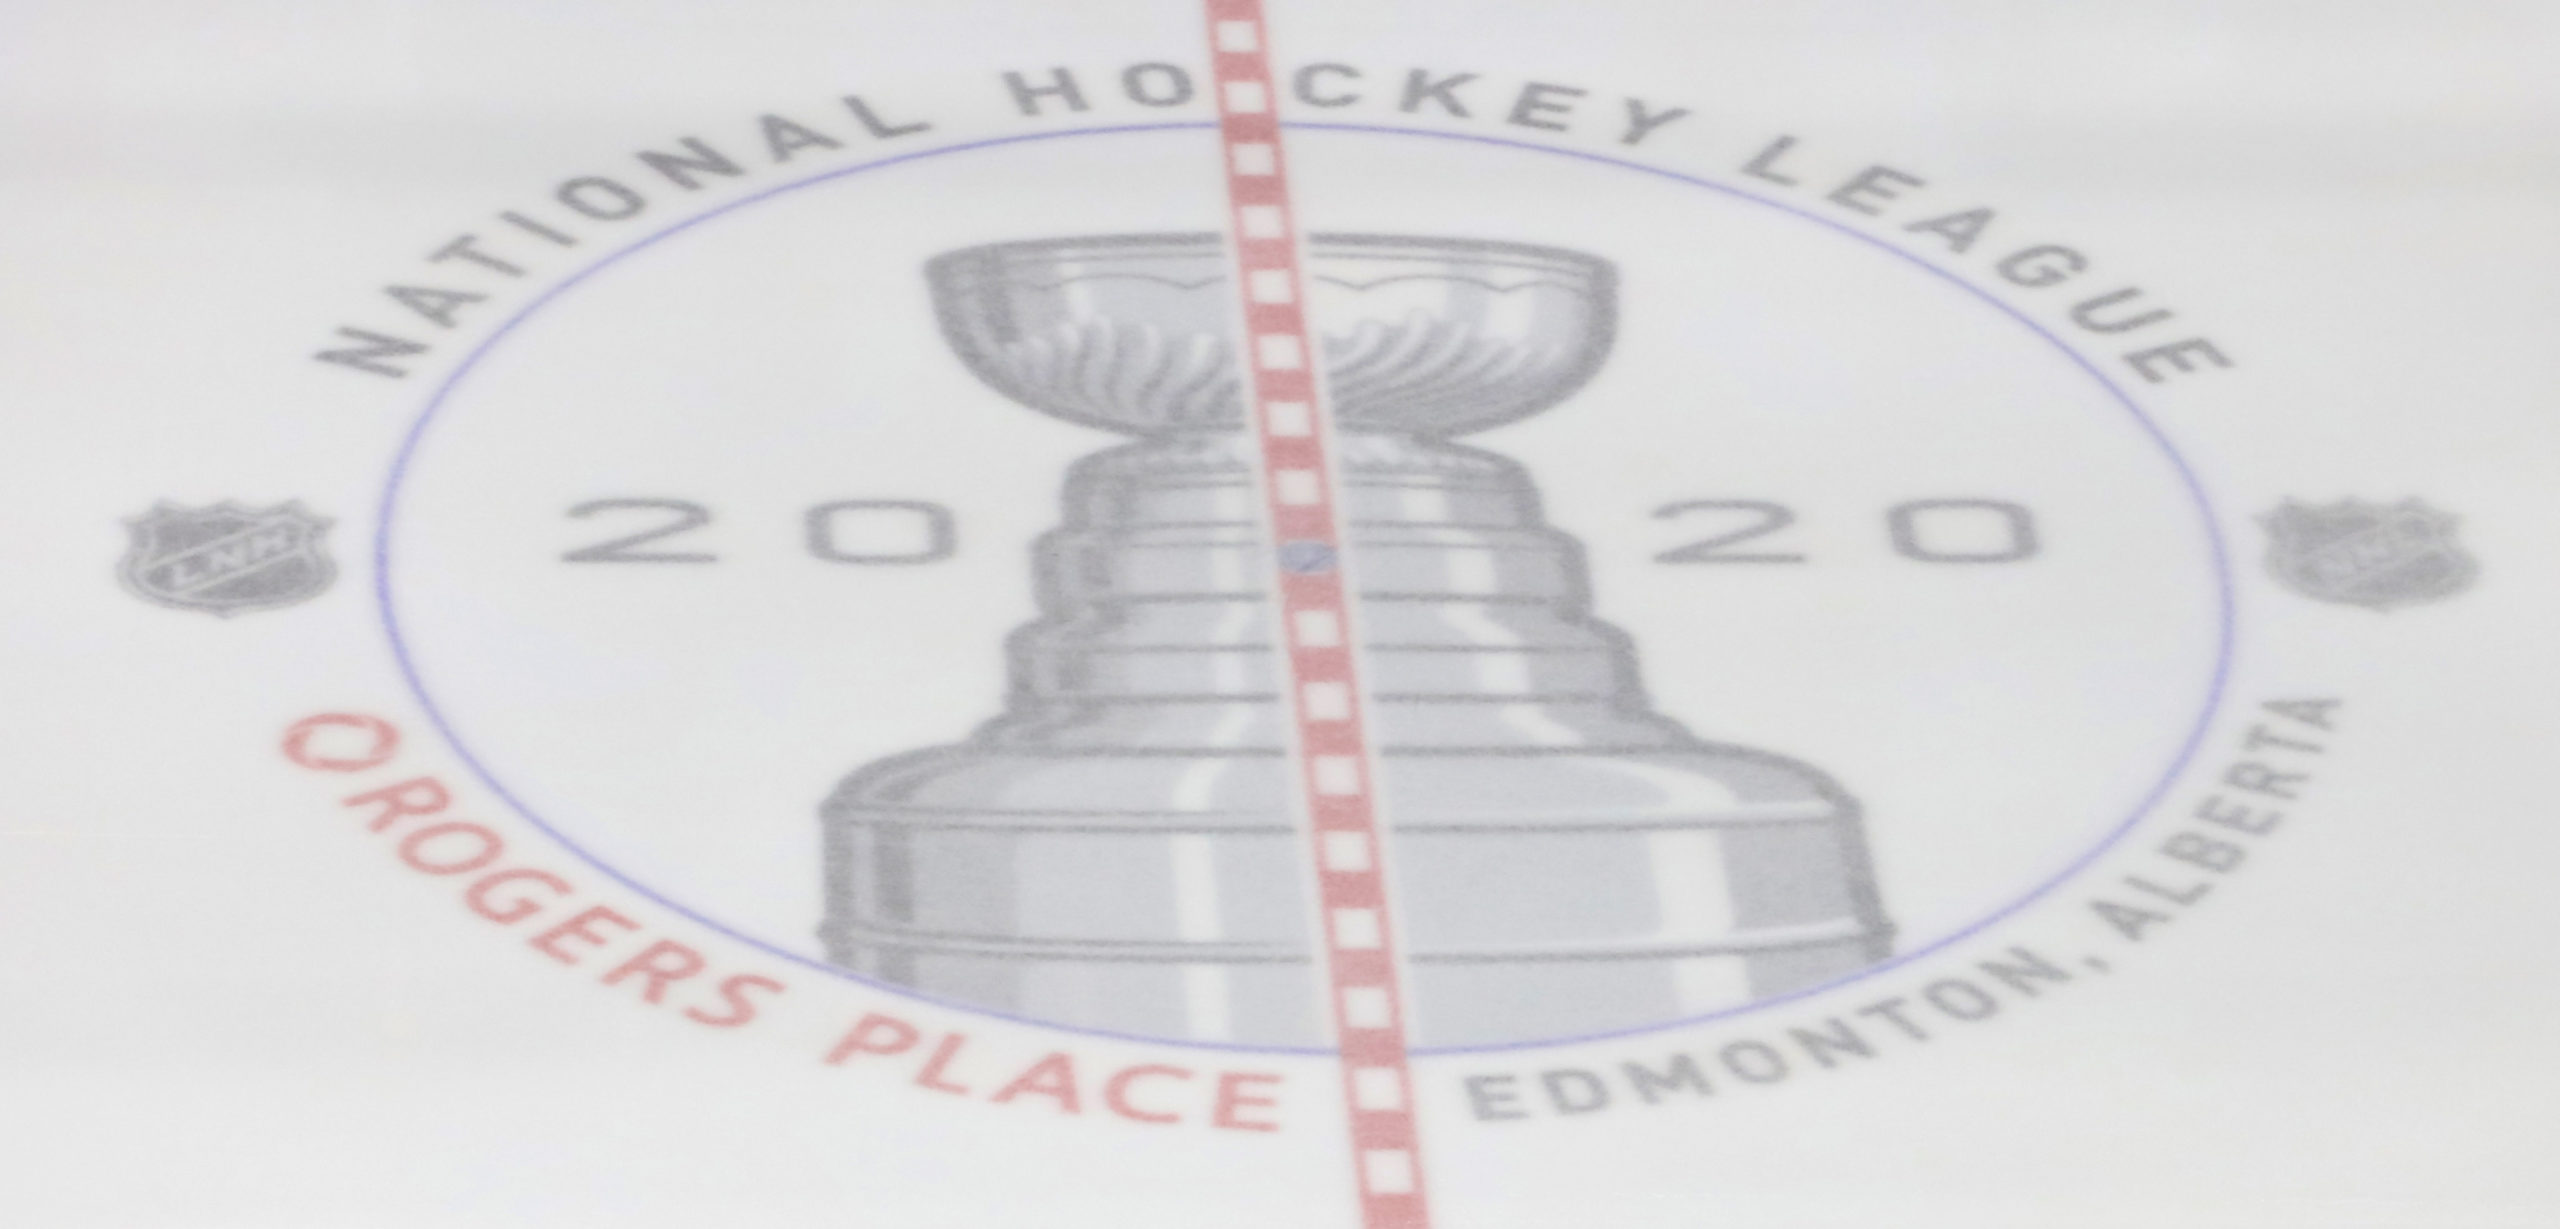 Coronavirus could delay start of 2020-21 NHL season, Golden Knights